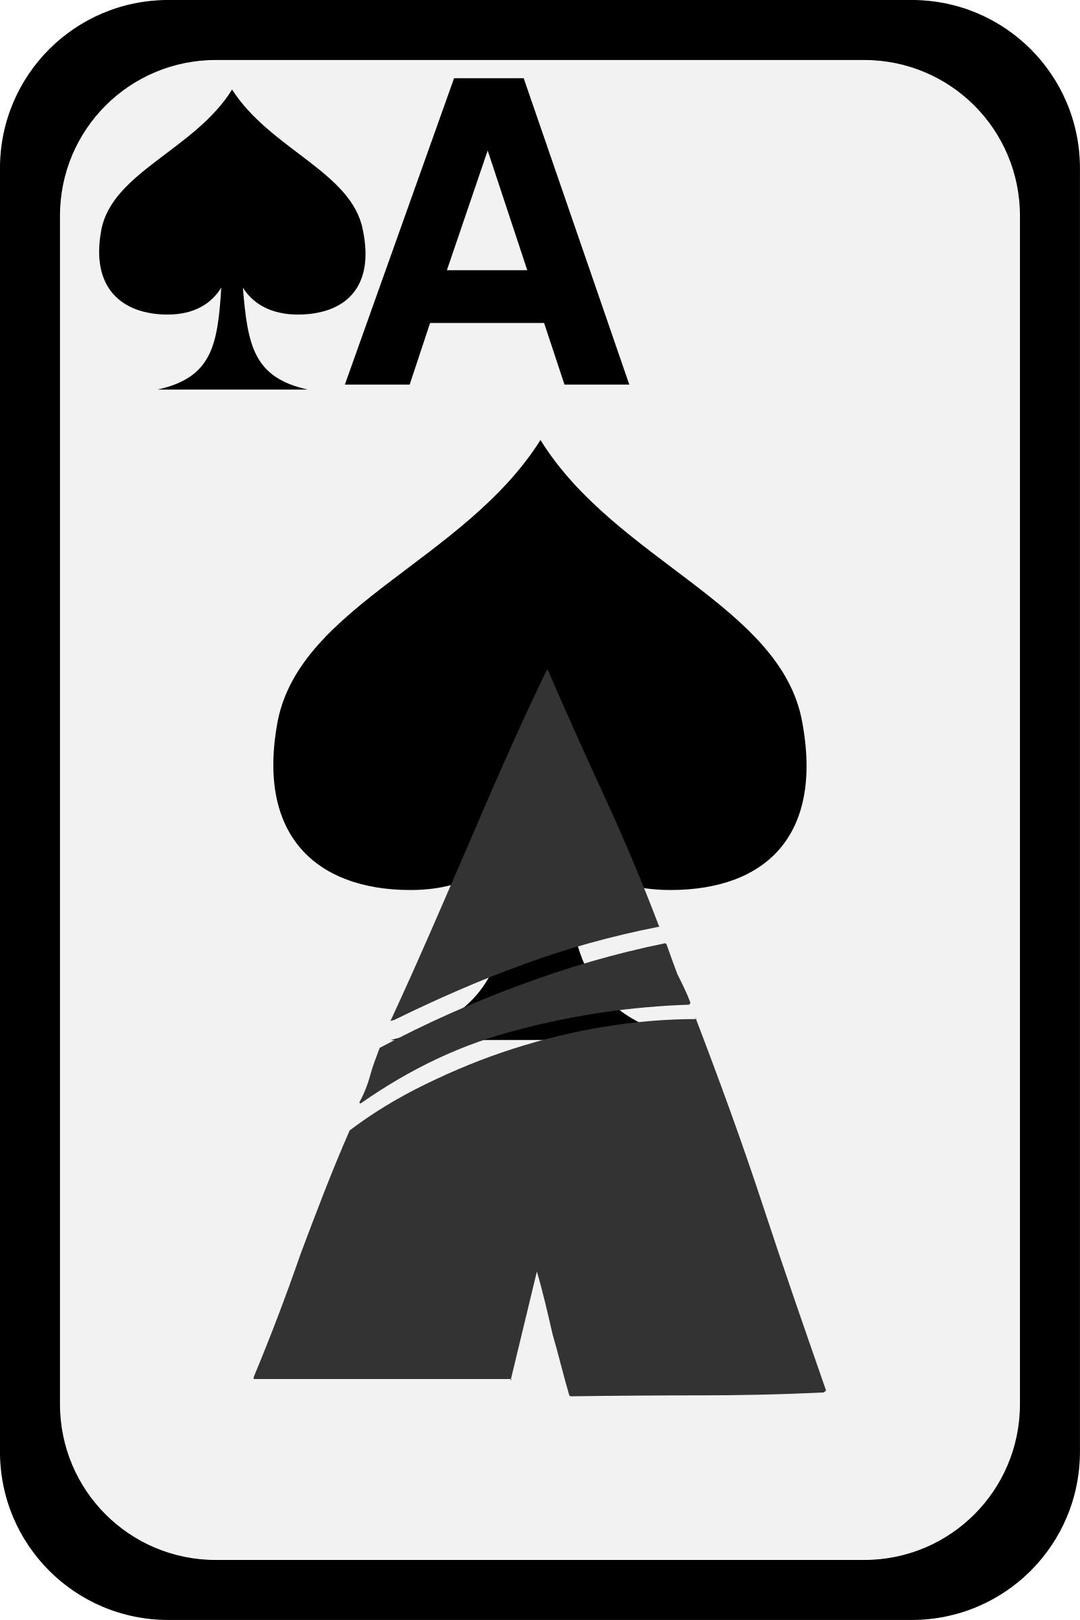 Ace of Spades png transparent